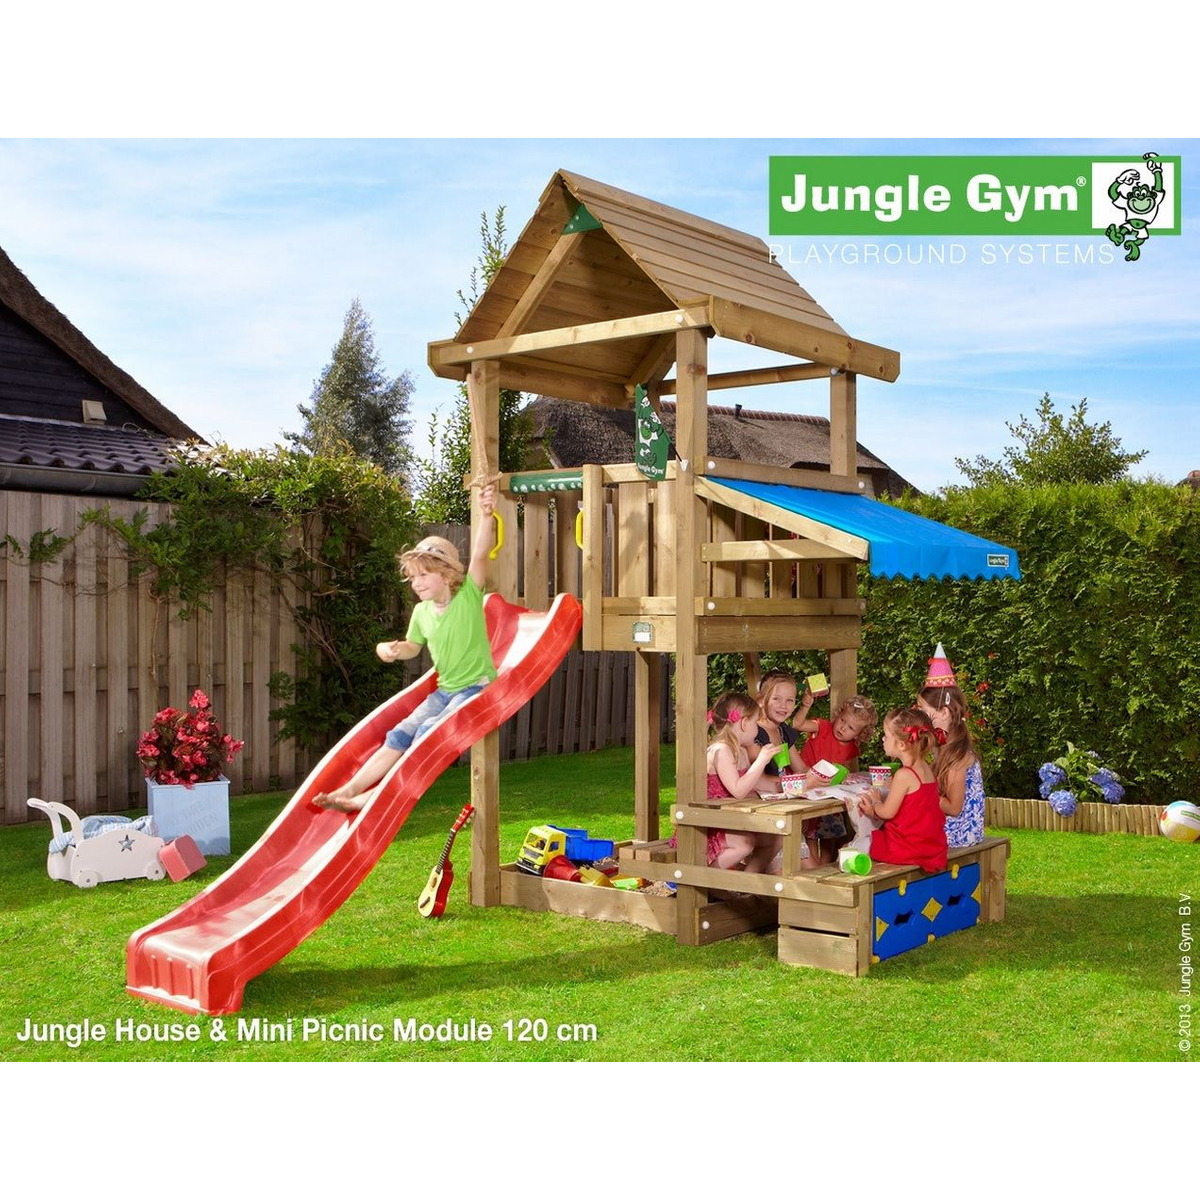 Jungle Gym Mini Picnic Module 120cm